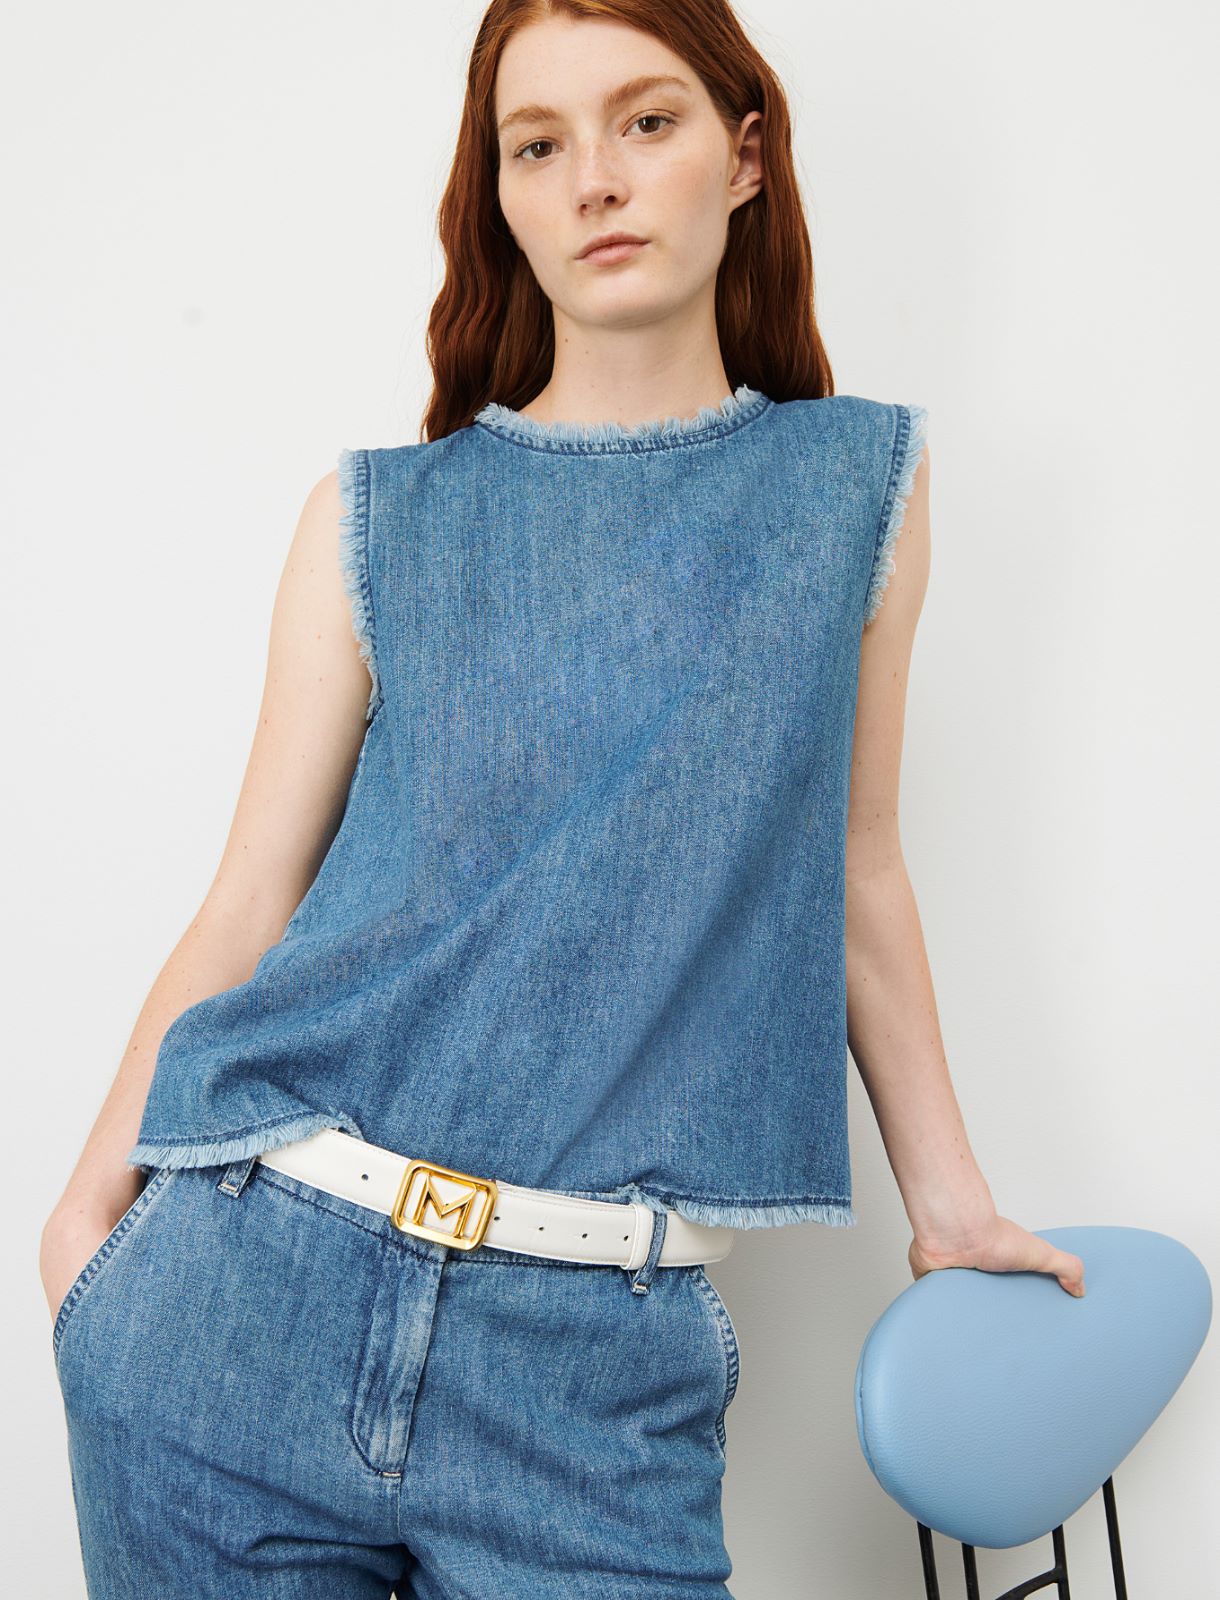 Denim top - Blue jeans - Marina Rinaldi - 3